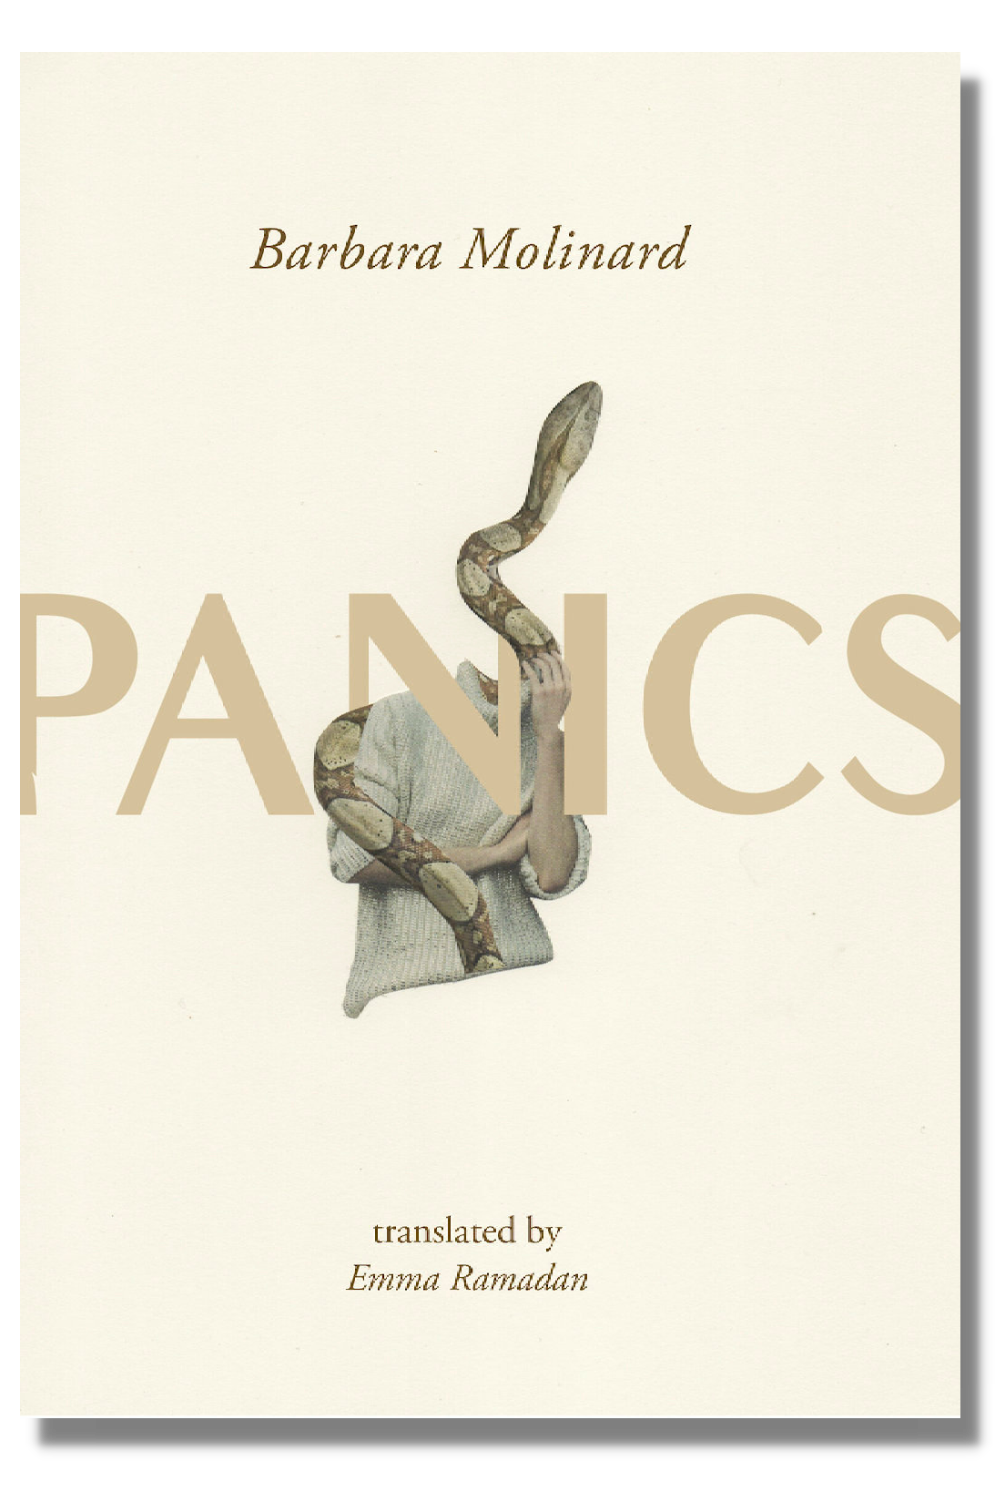 The cover of Barbara Molinard's "Panics," tr. by Emma Ramadan